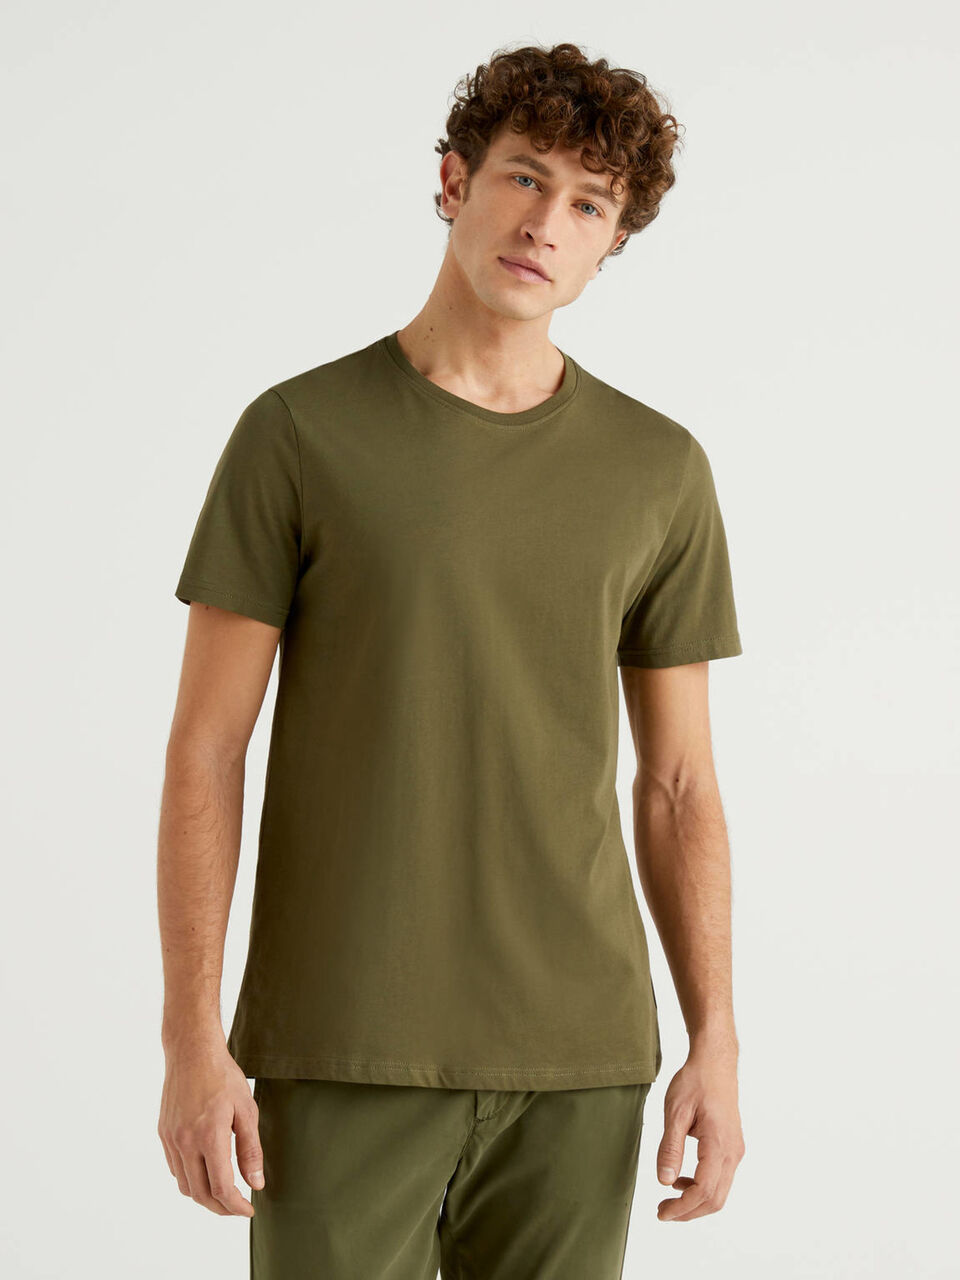 Customizable military green t-shirt